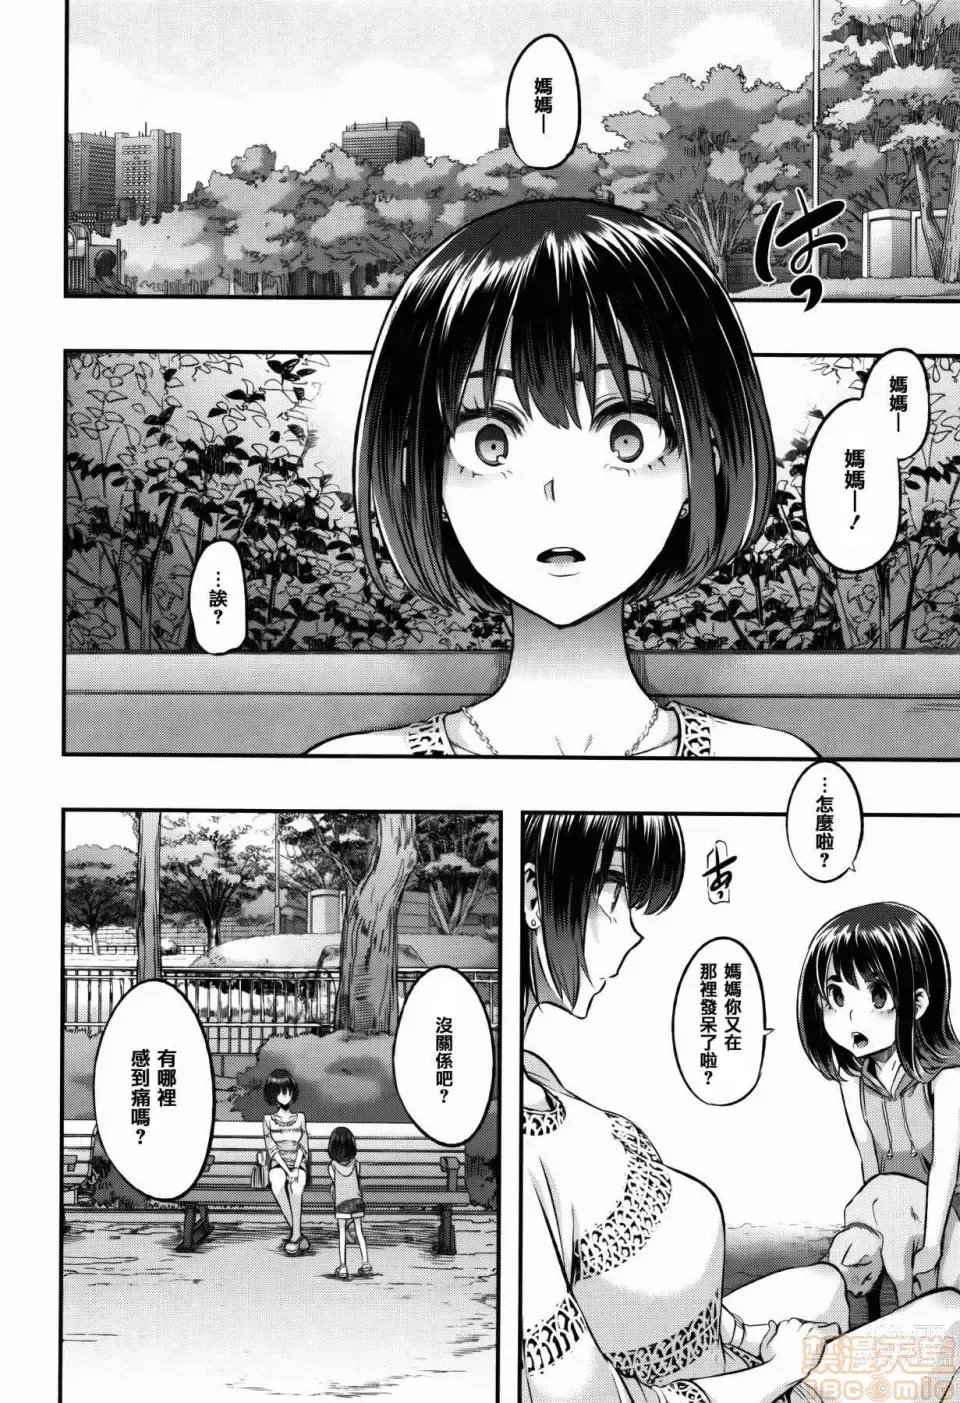 Page 242 of manga Henshin